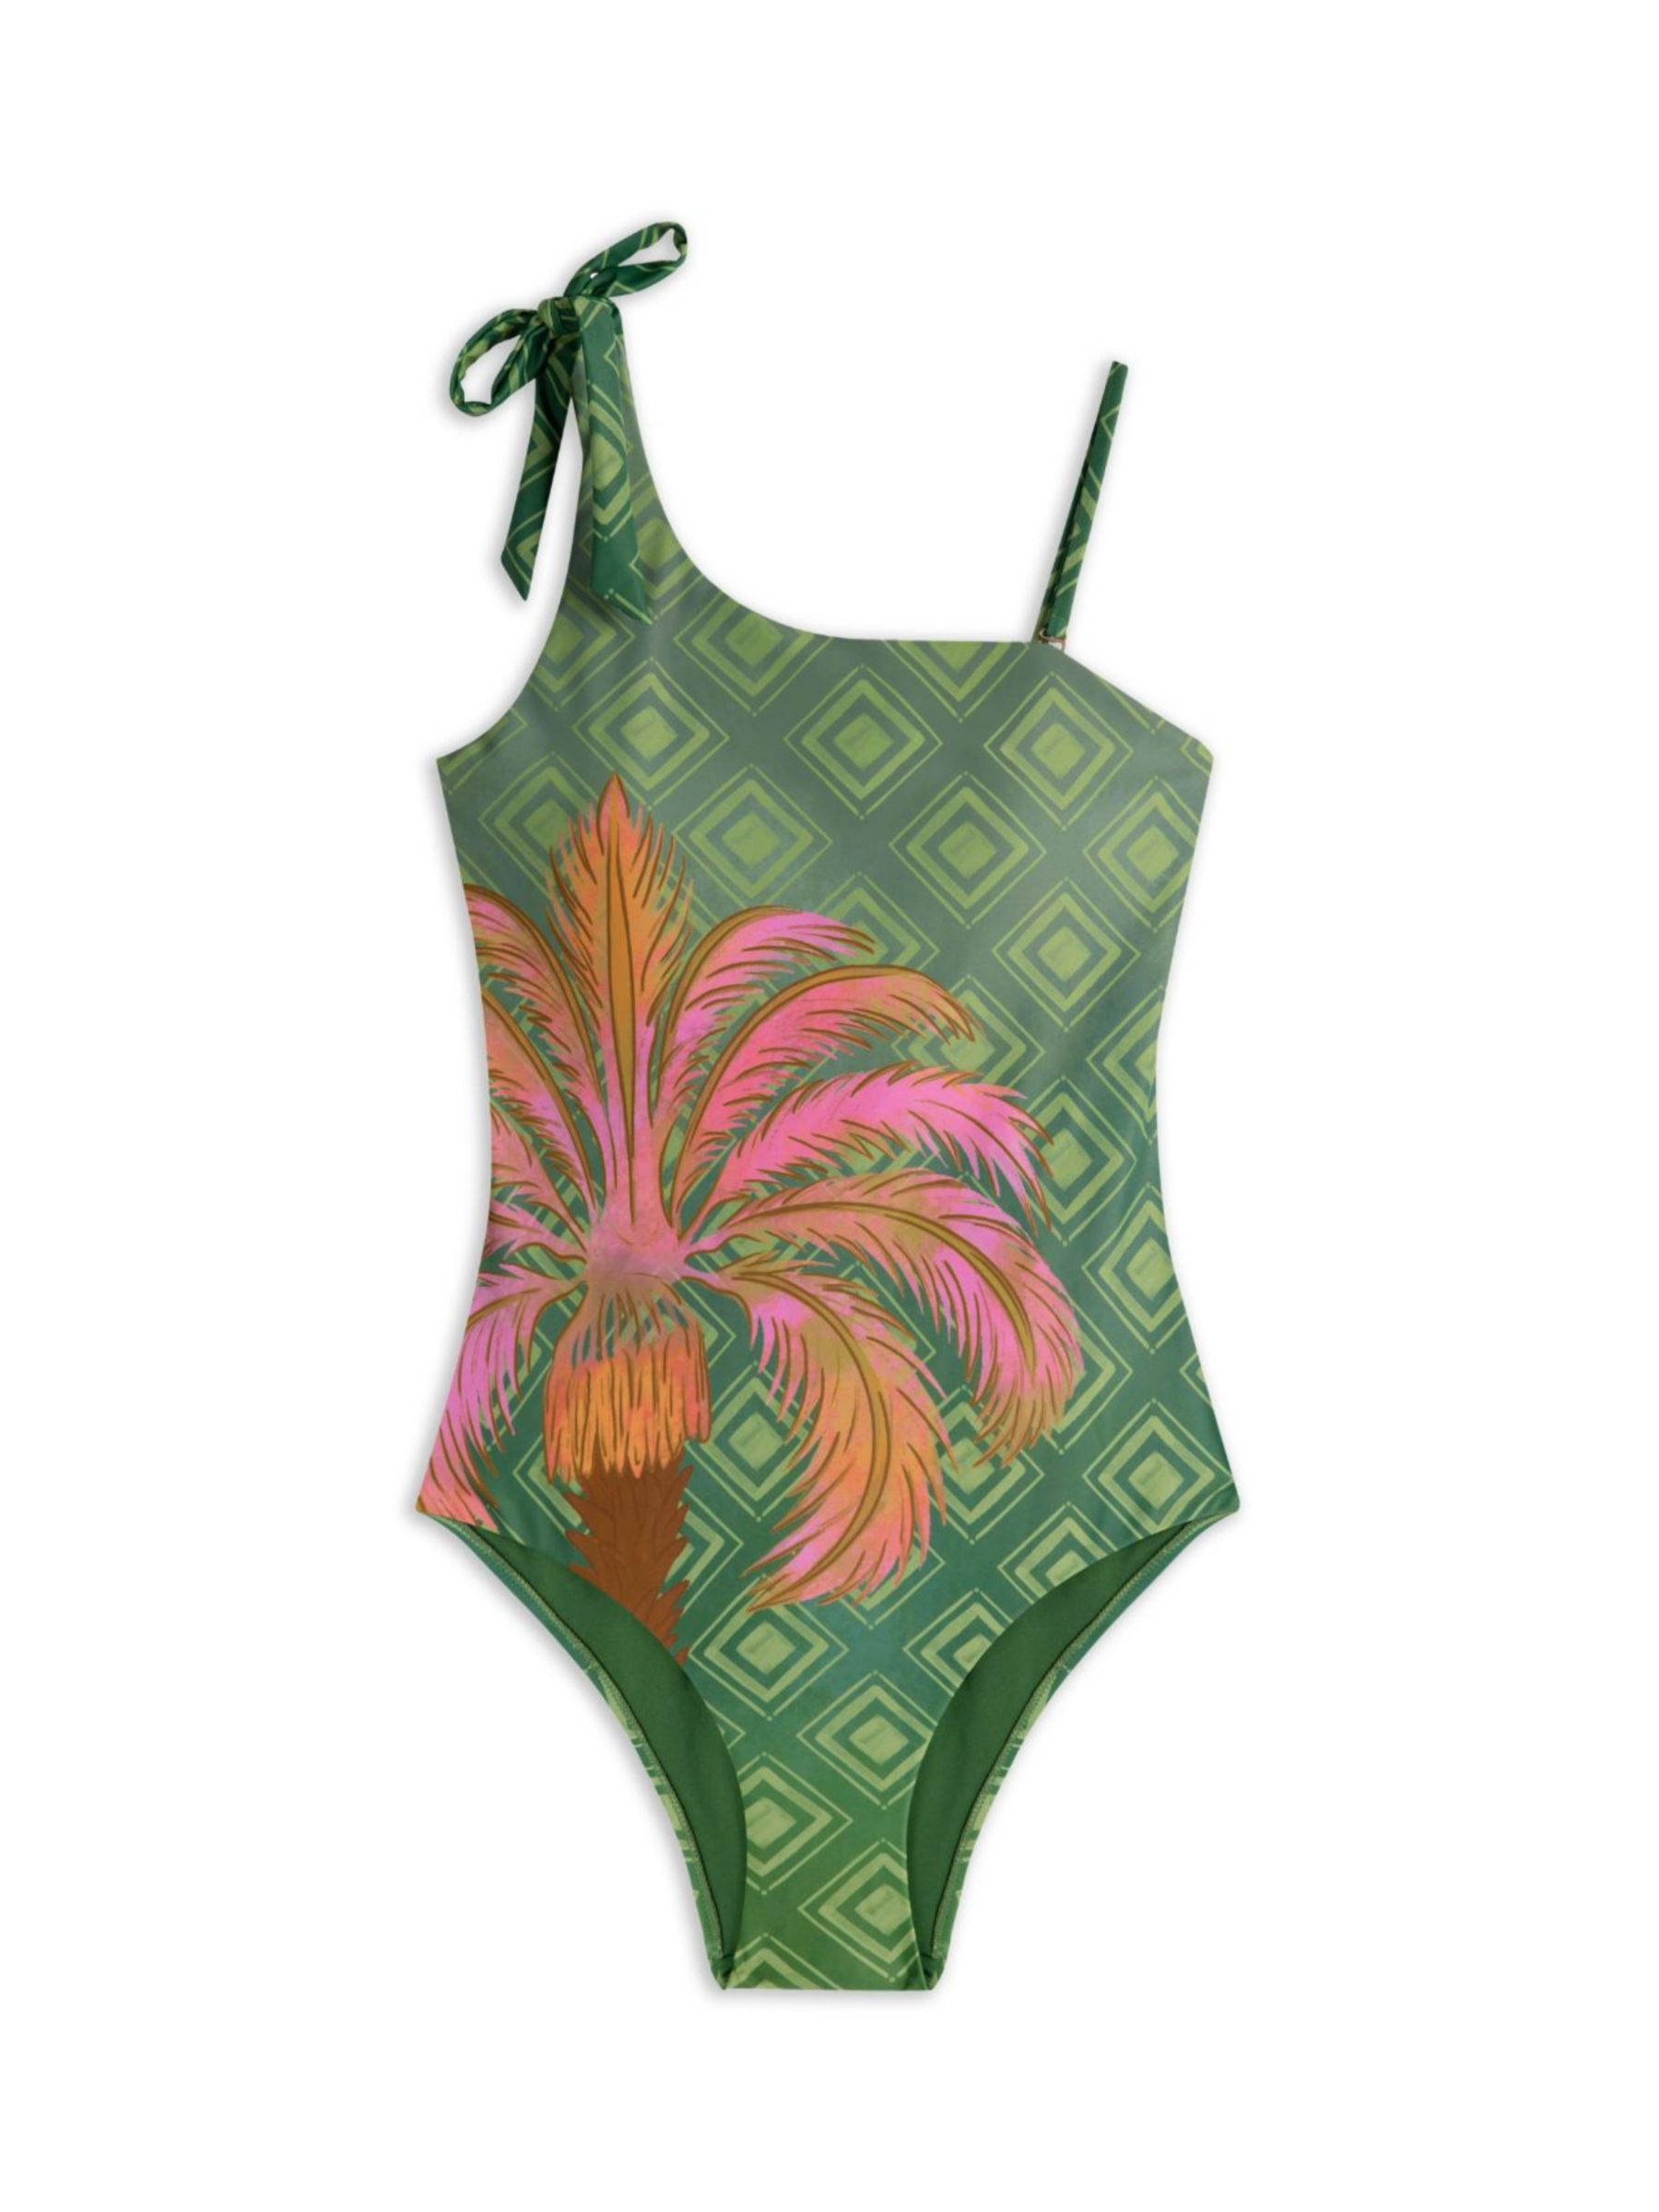 Chelsea Peers Palm Print One Shoulder Swimsuit, Khaki/Multi, 6